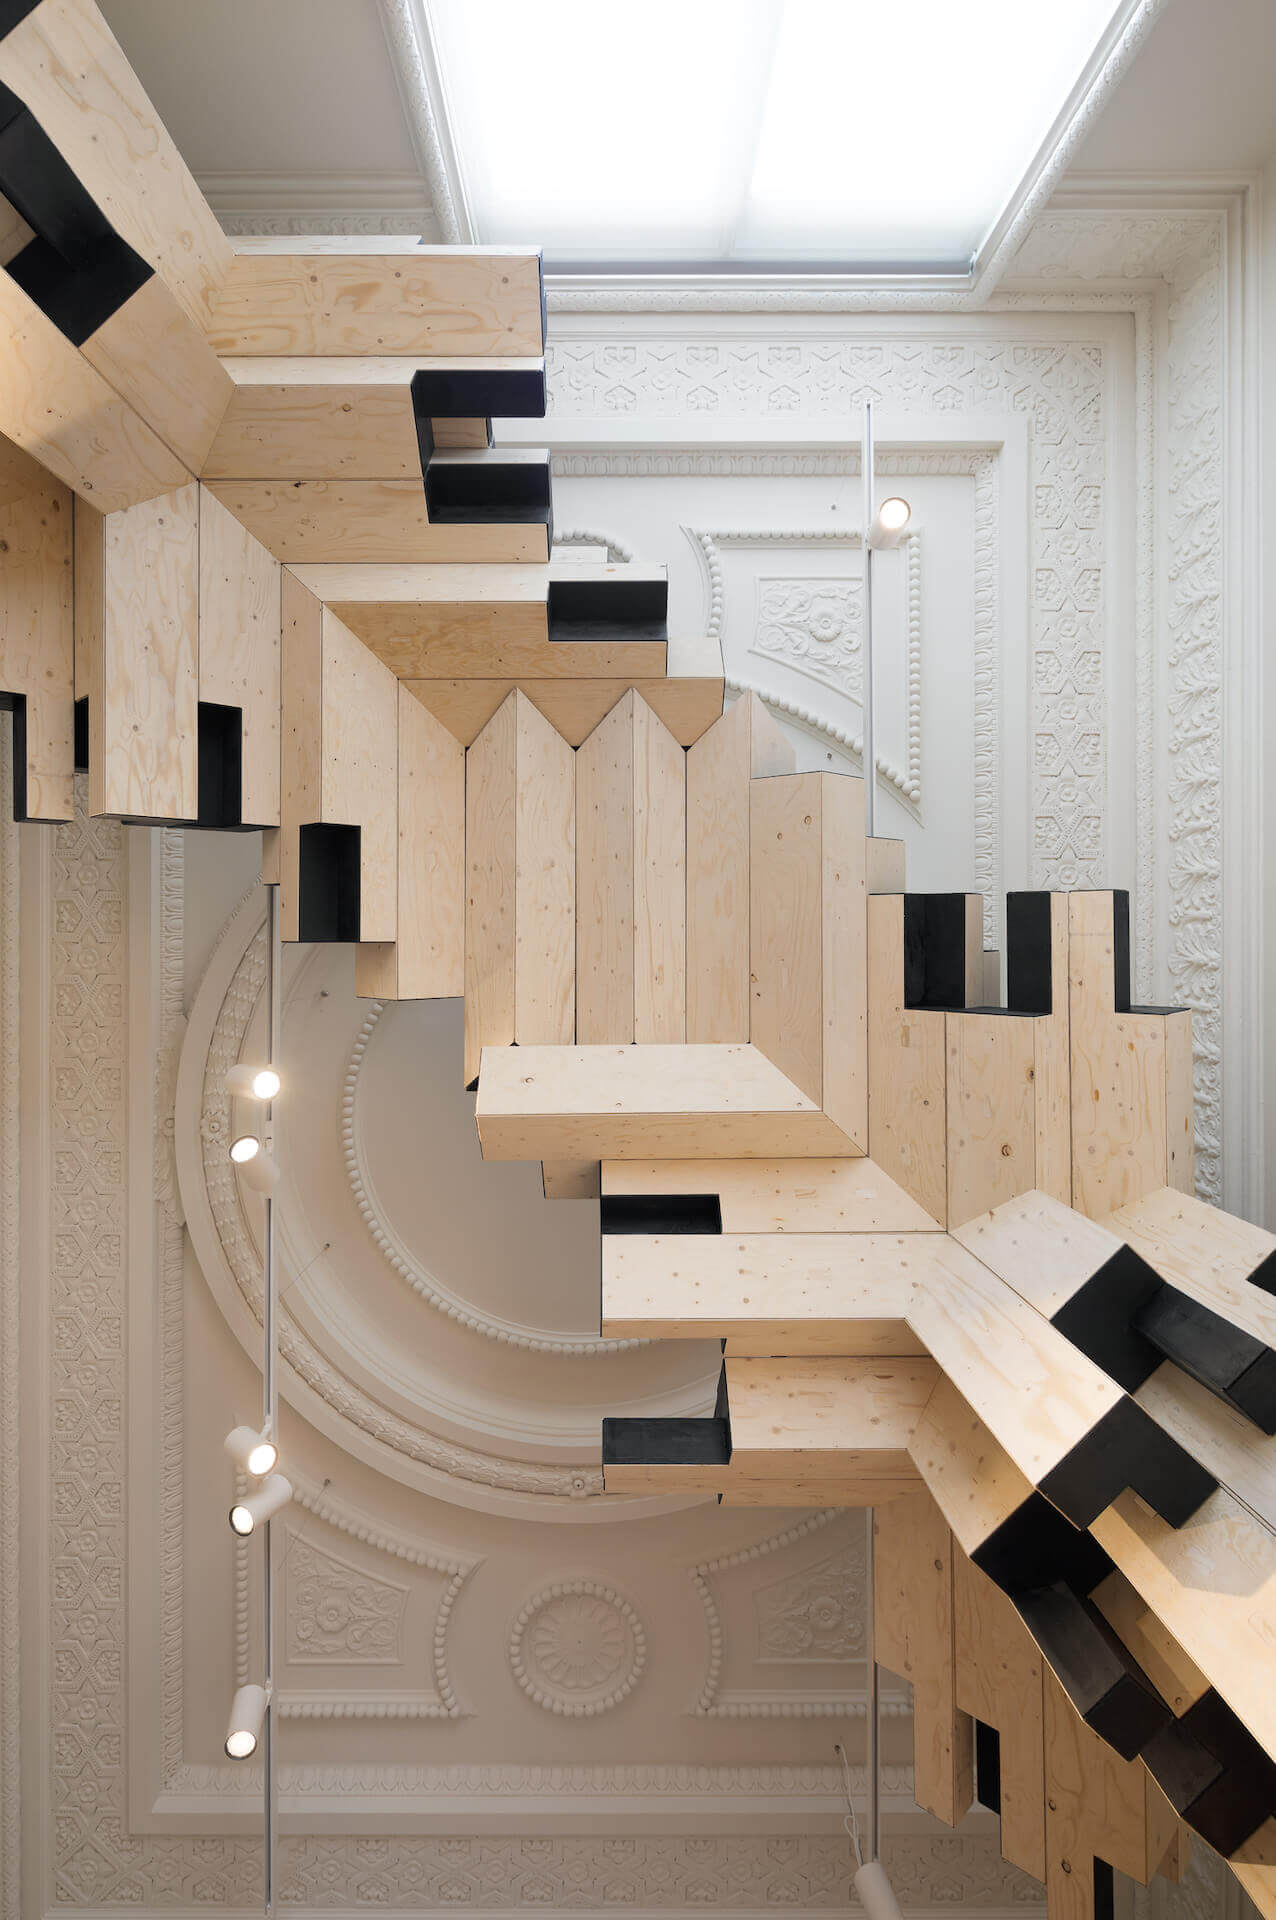 Gilles Retsin - Royal Academy structure